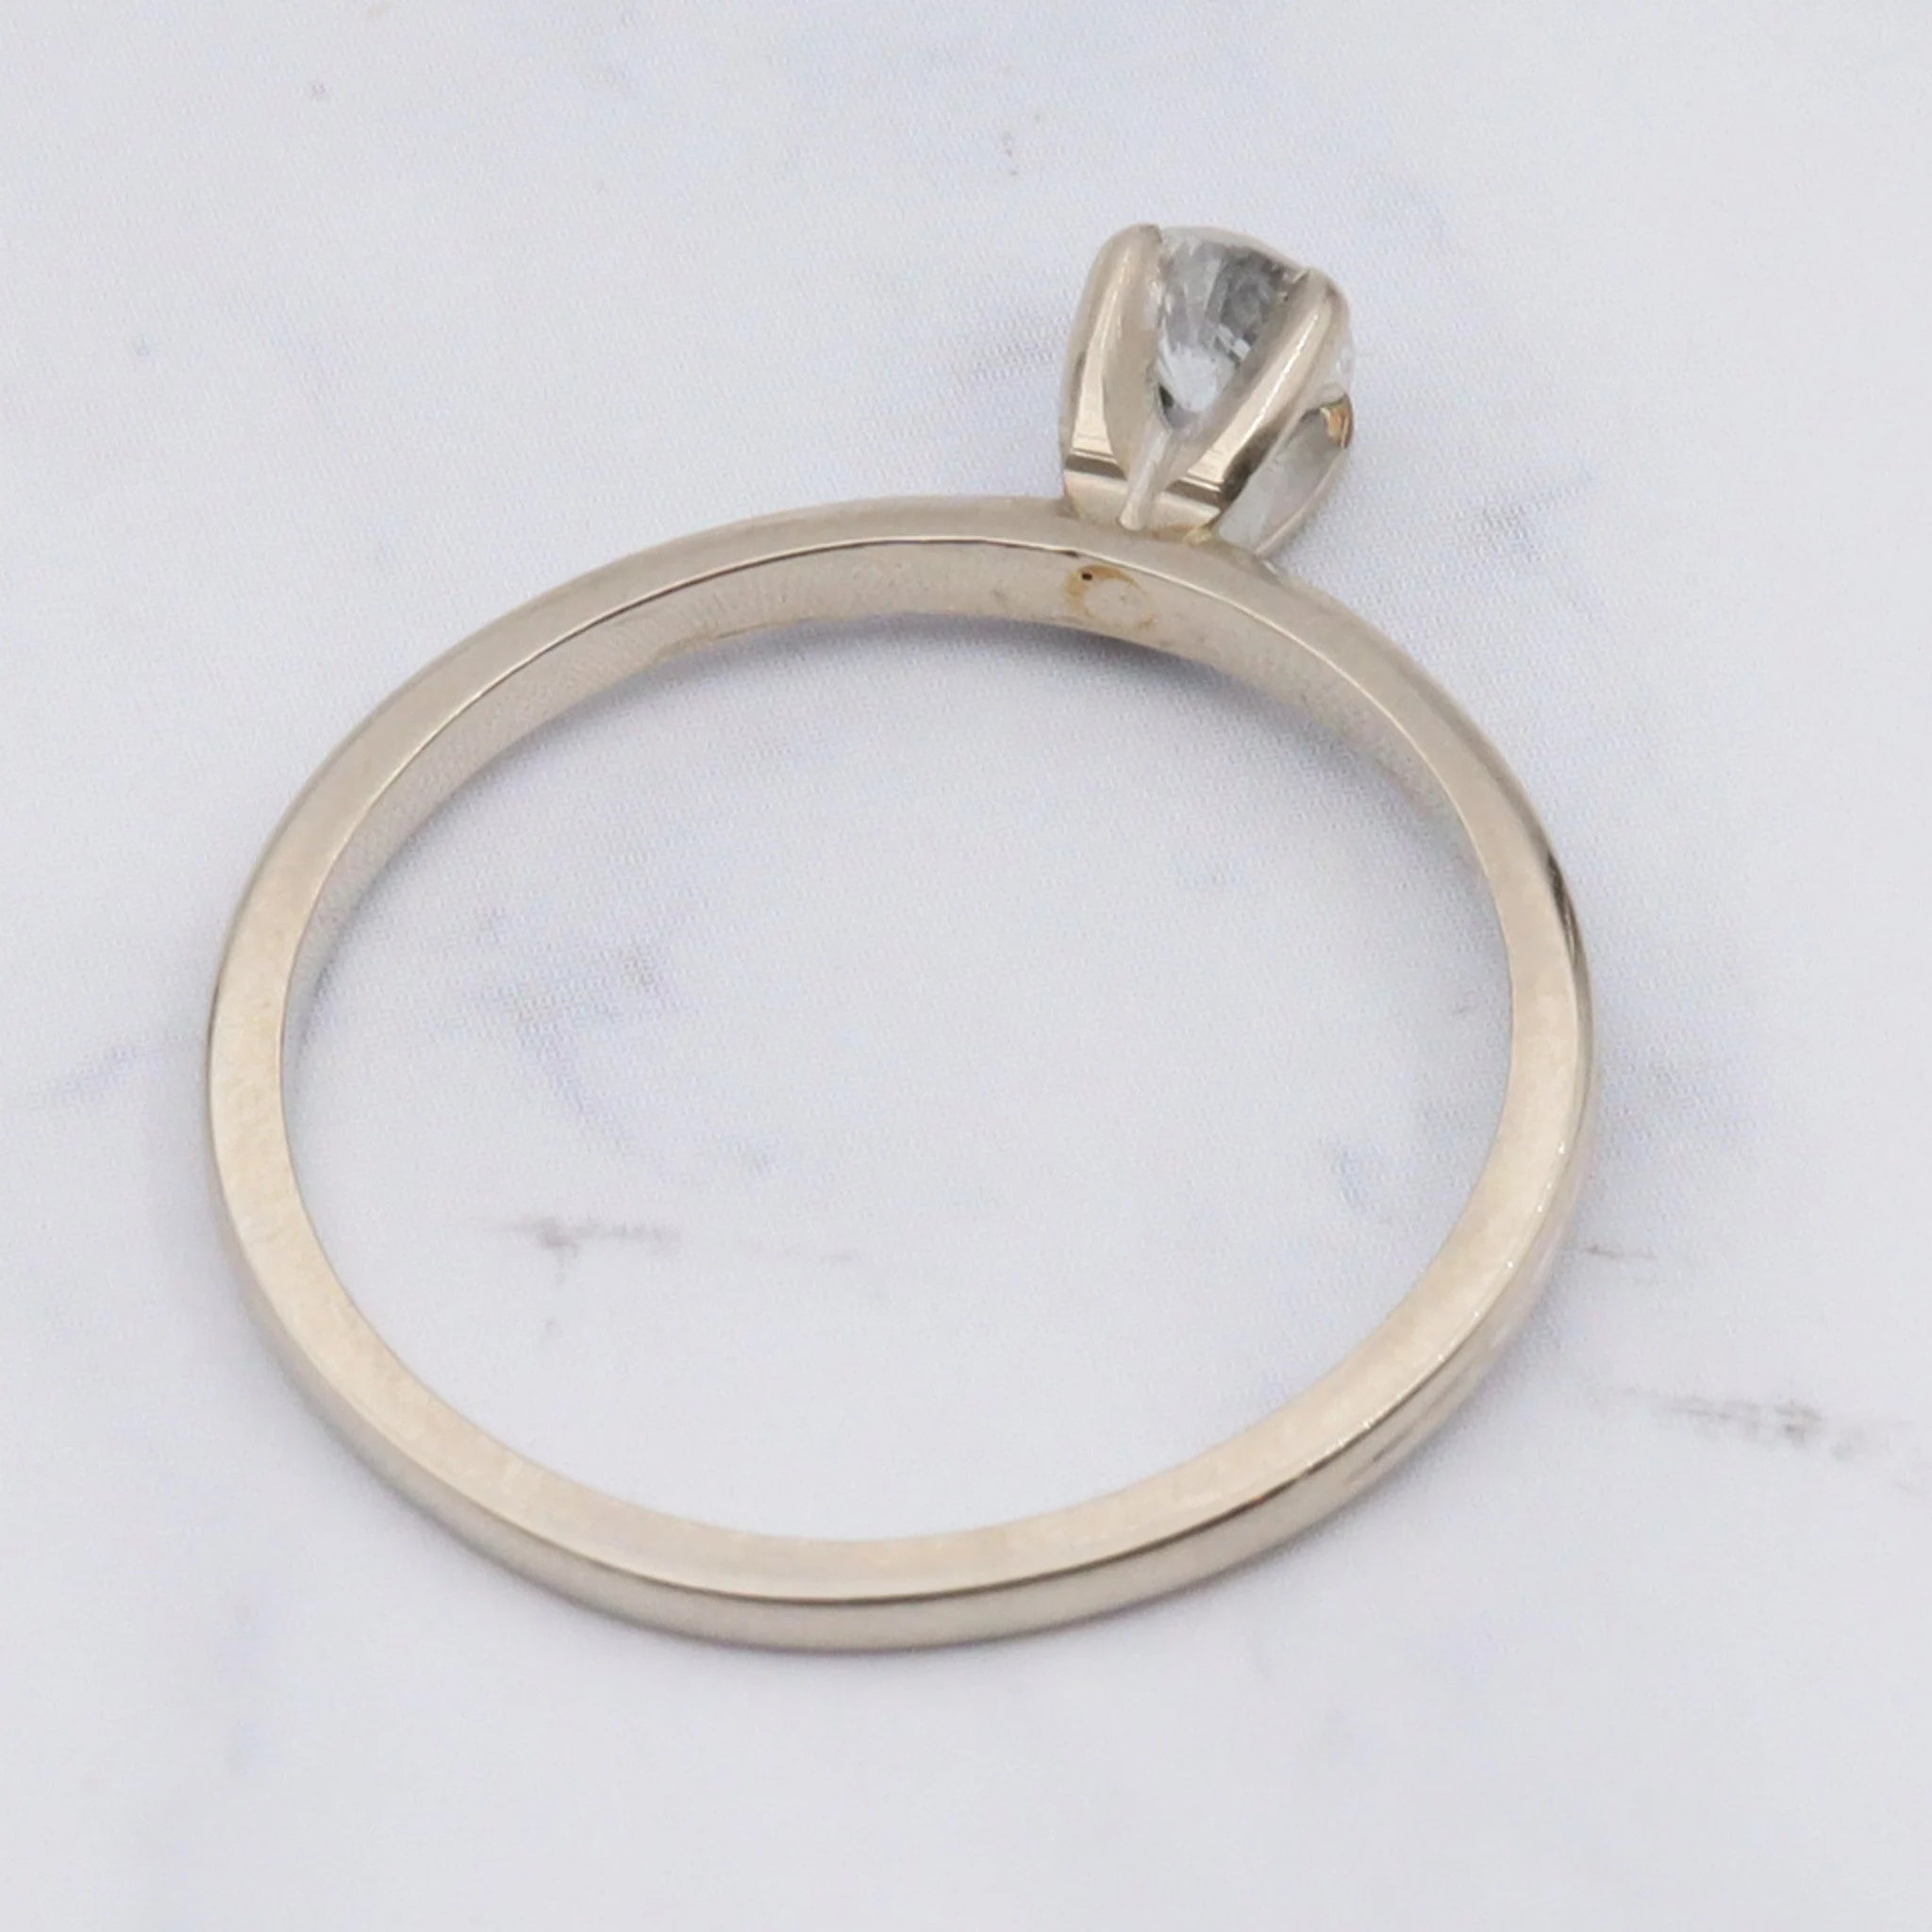 Antique Art Deco 14k white gold .25ct diamond solitaire ring, size 7.25